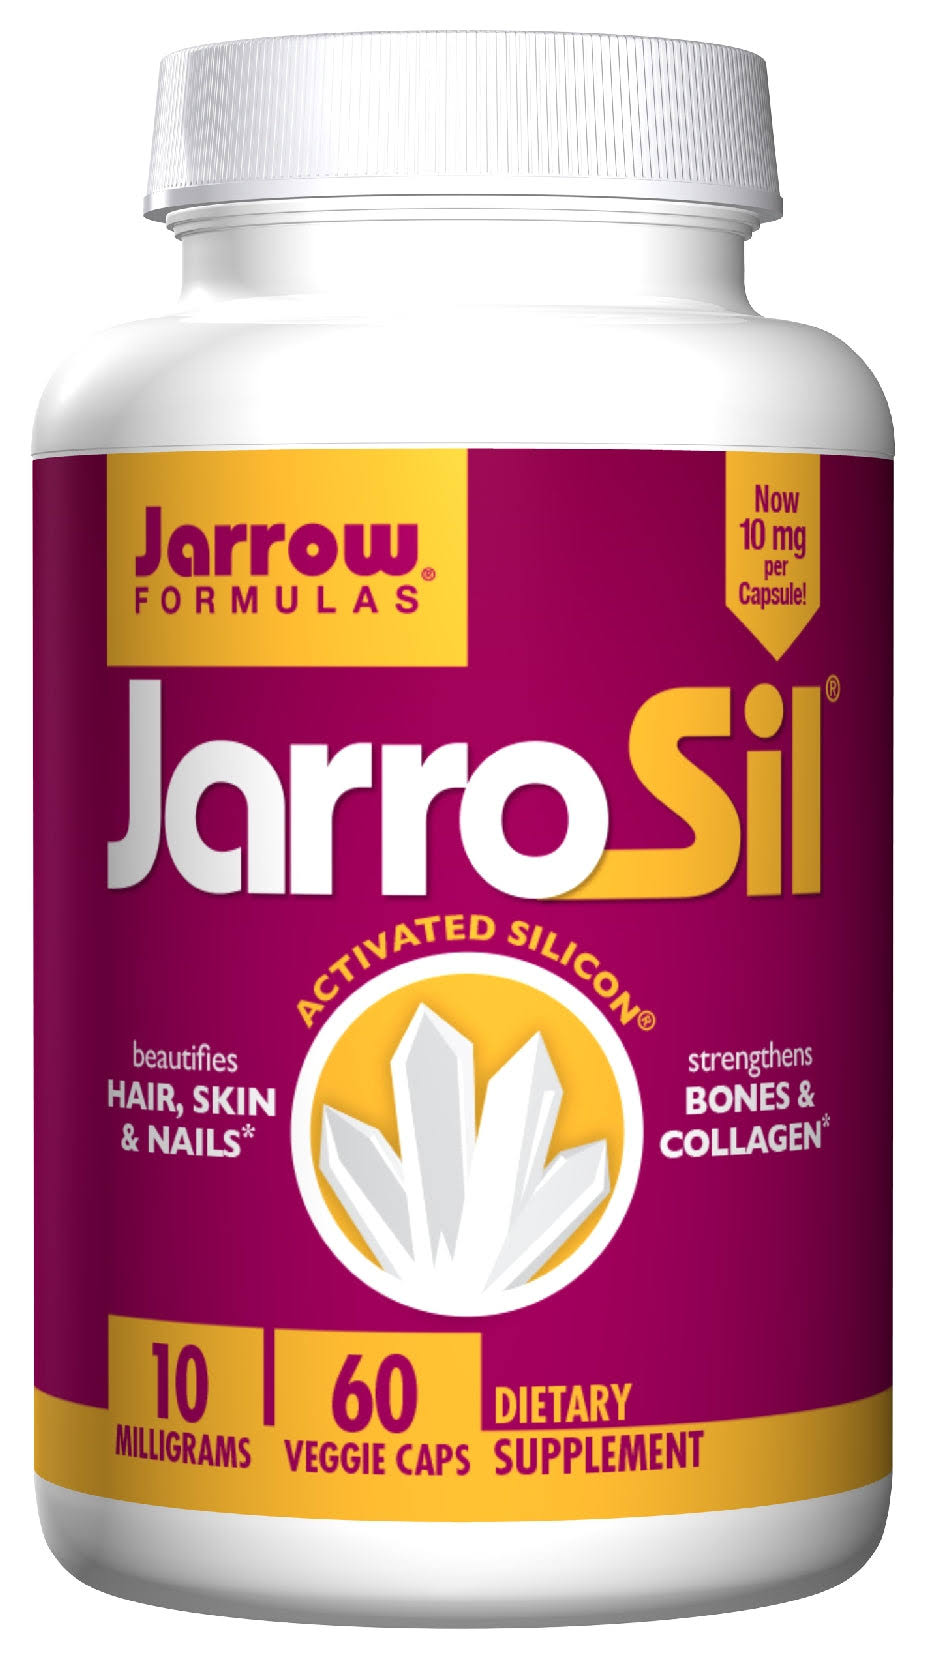 Jarrow Formulas Jarrosil Dietary Supplement - 5mg, 60 Capsules